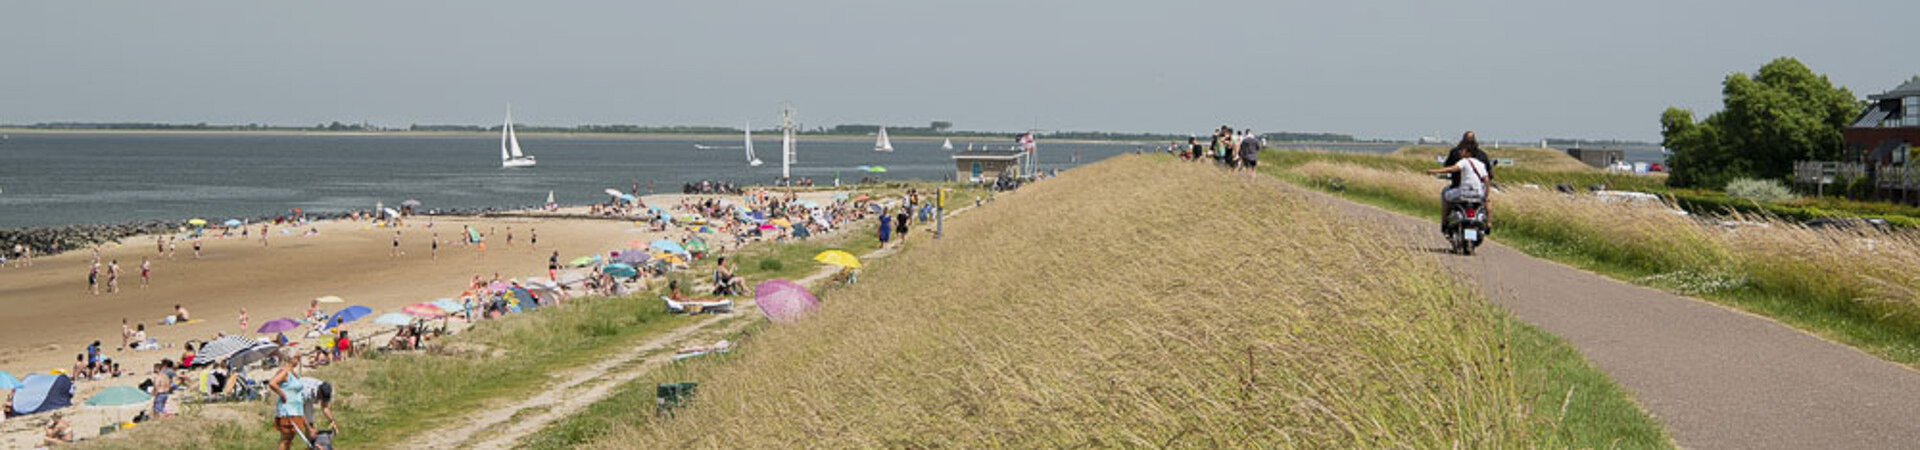 Strand van Wemeldinge